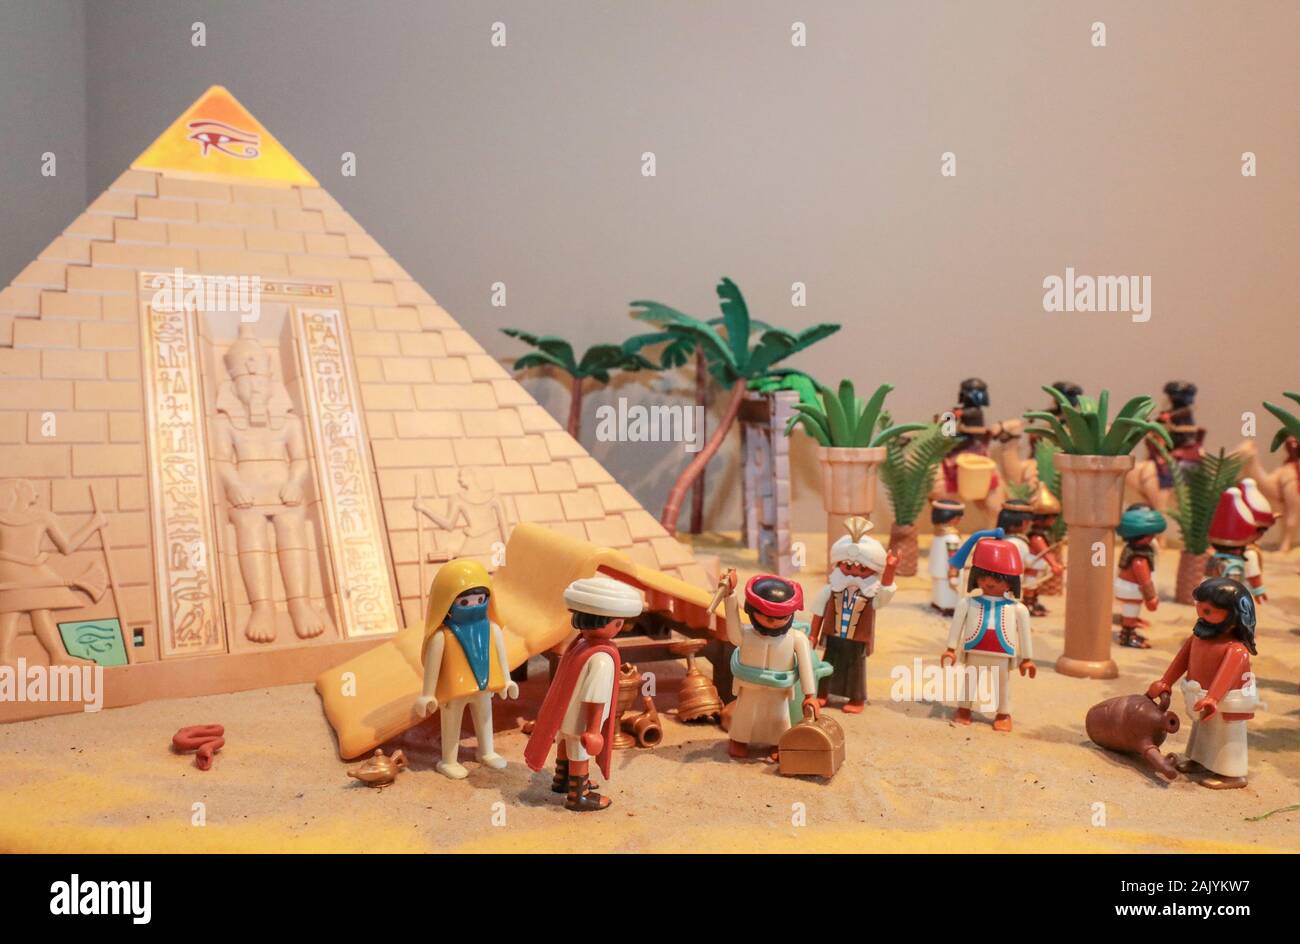 Historia de playmobil fotografías e imágenes de alta resolución - Alamy